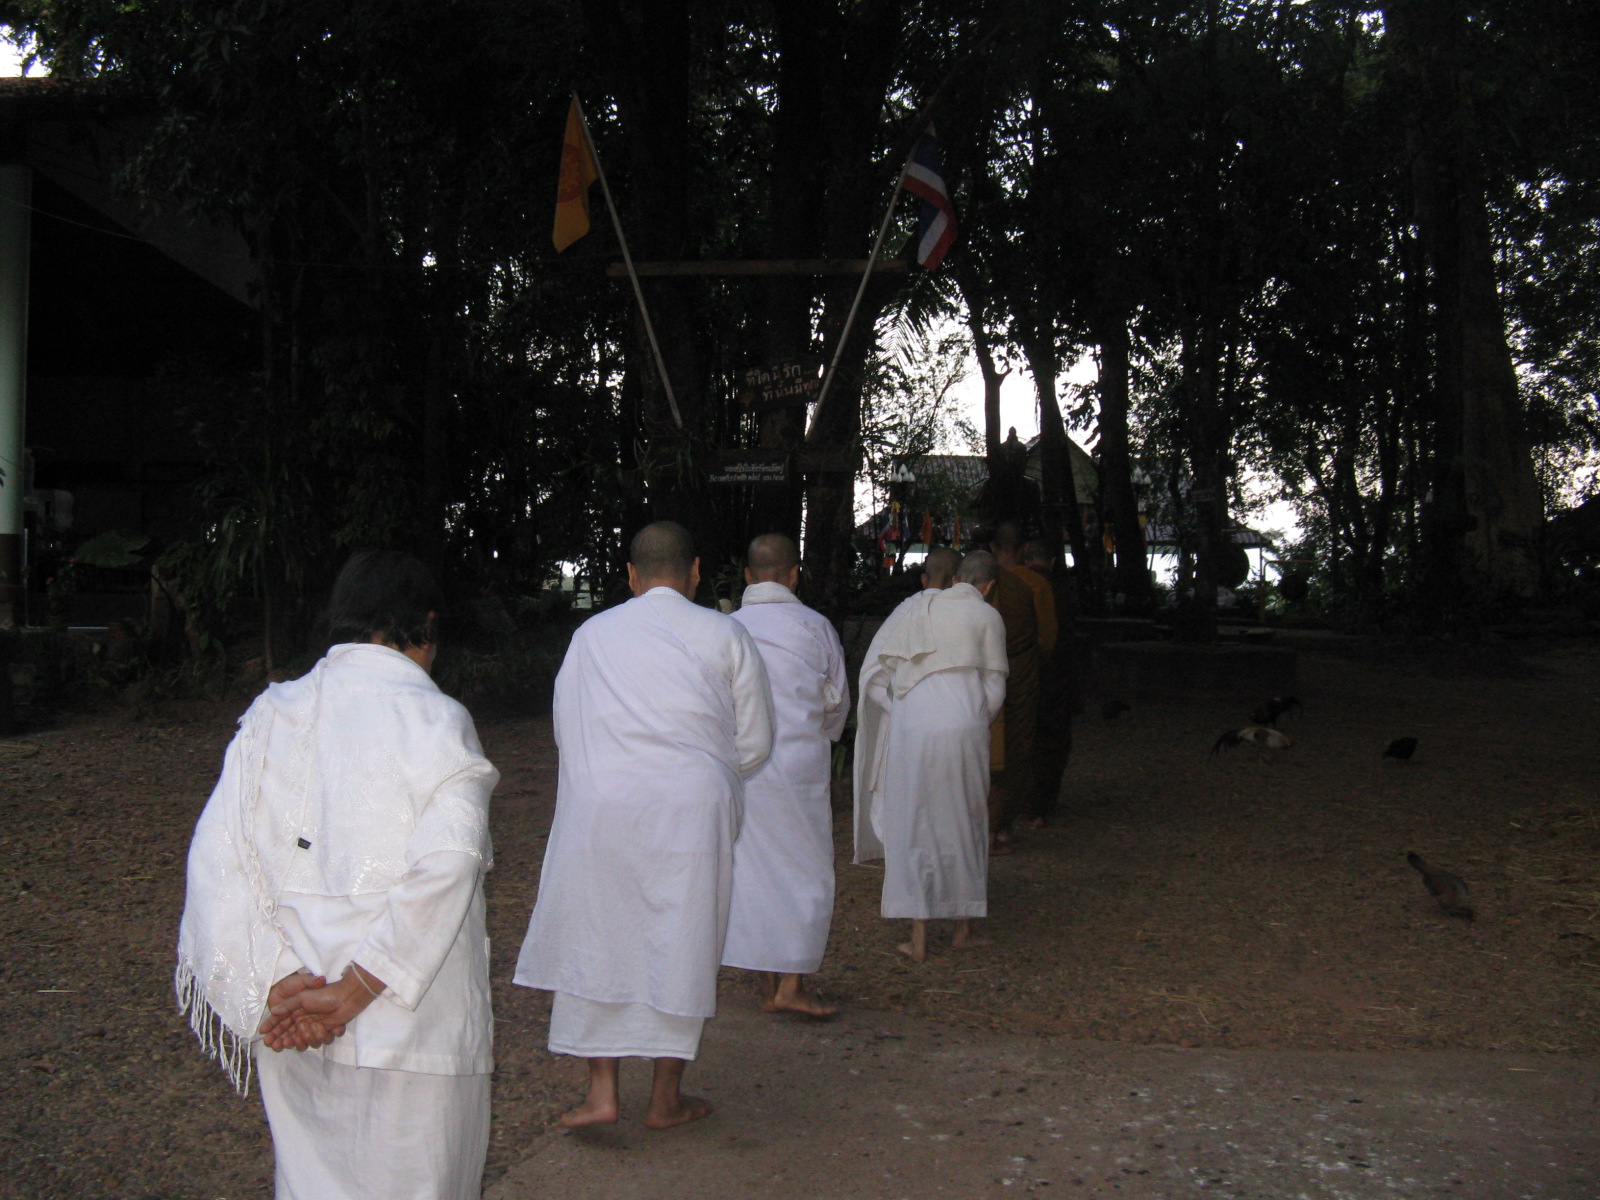 nuns in walking meditation